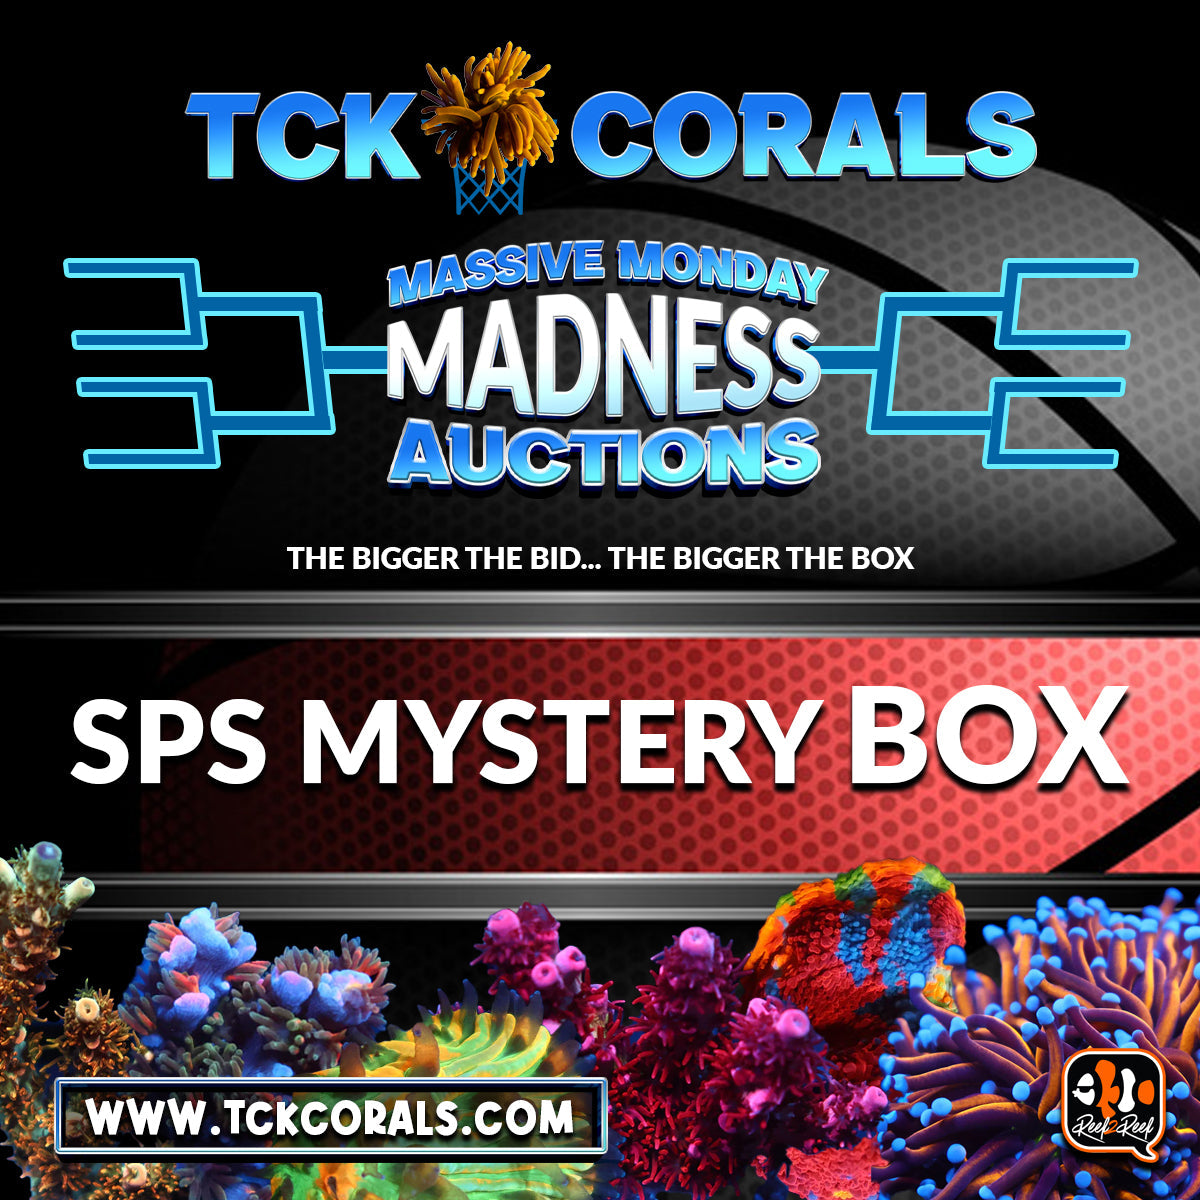 SPS MYSTERY BOX